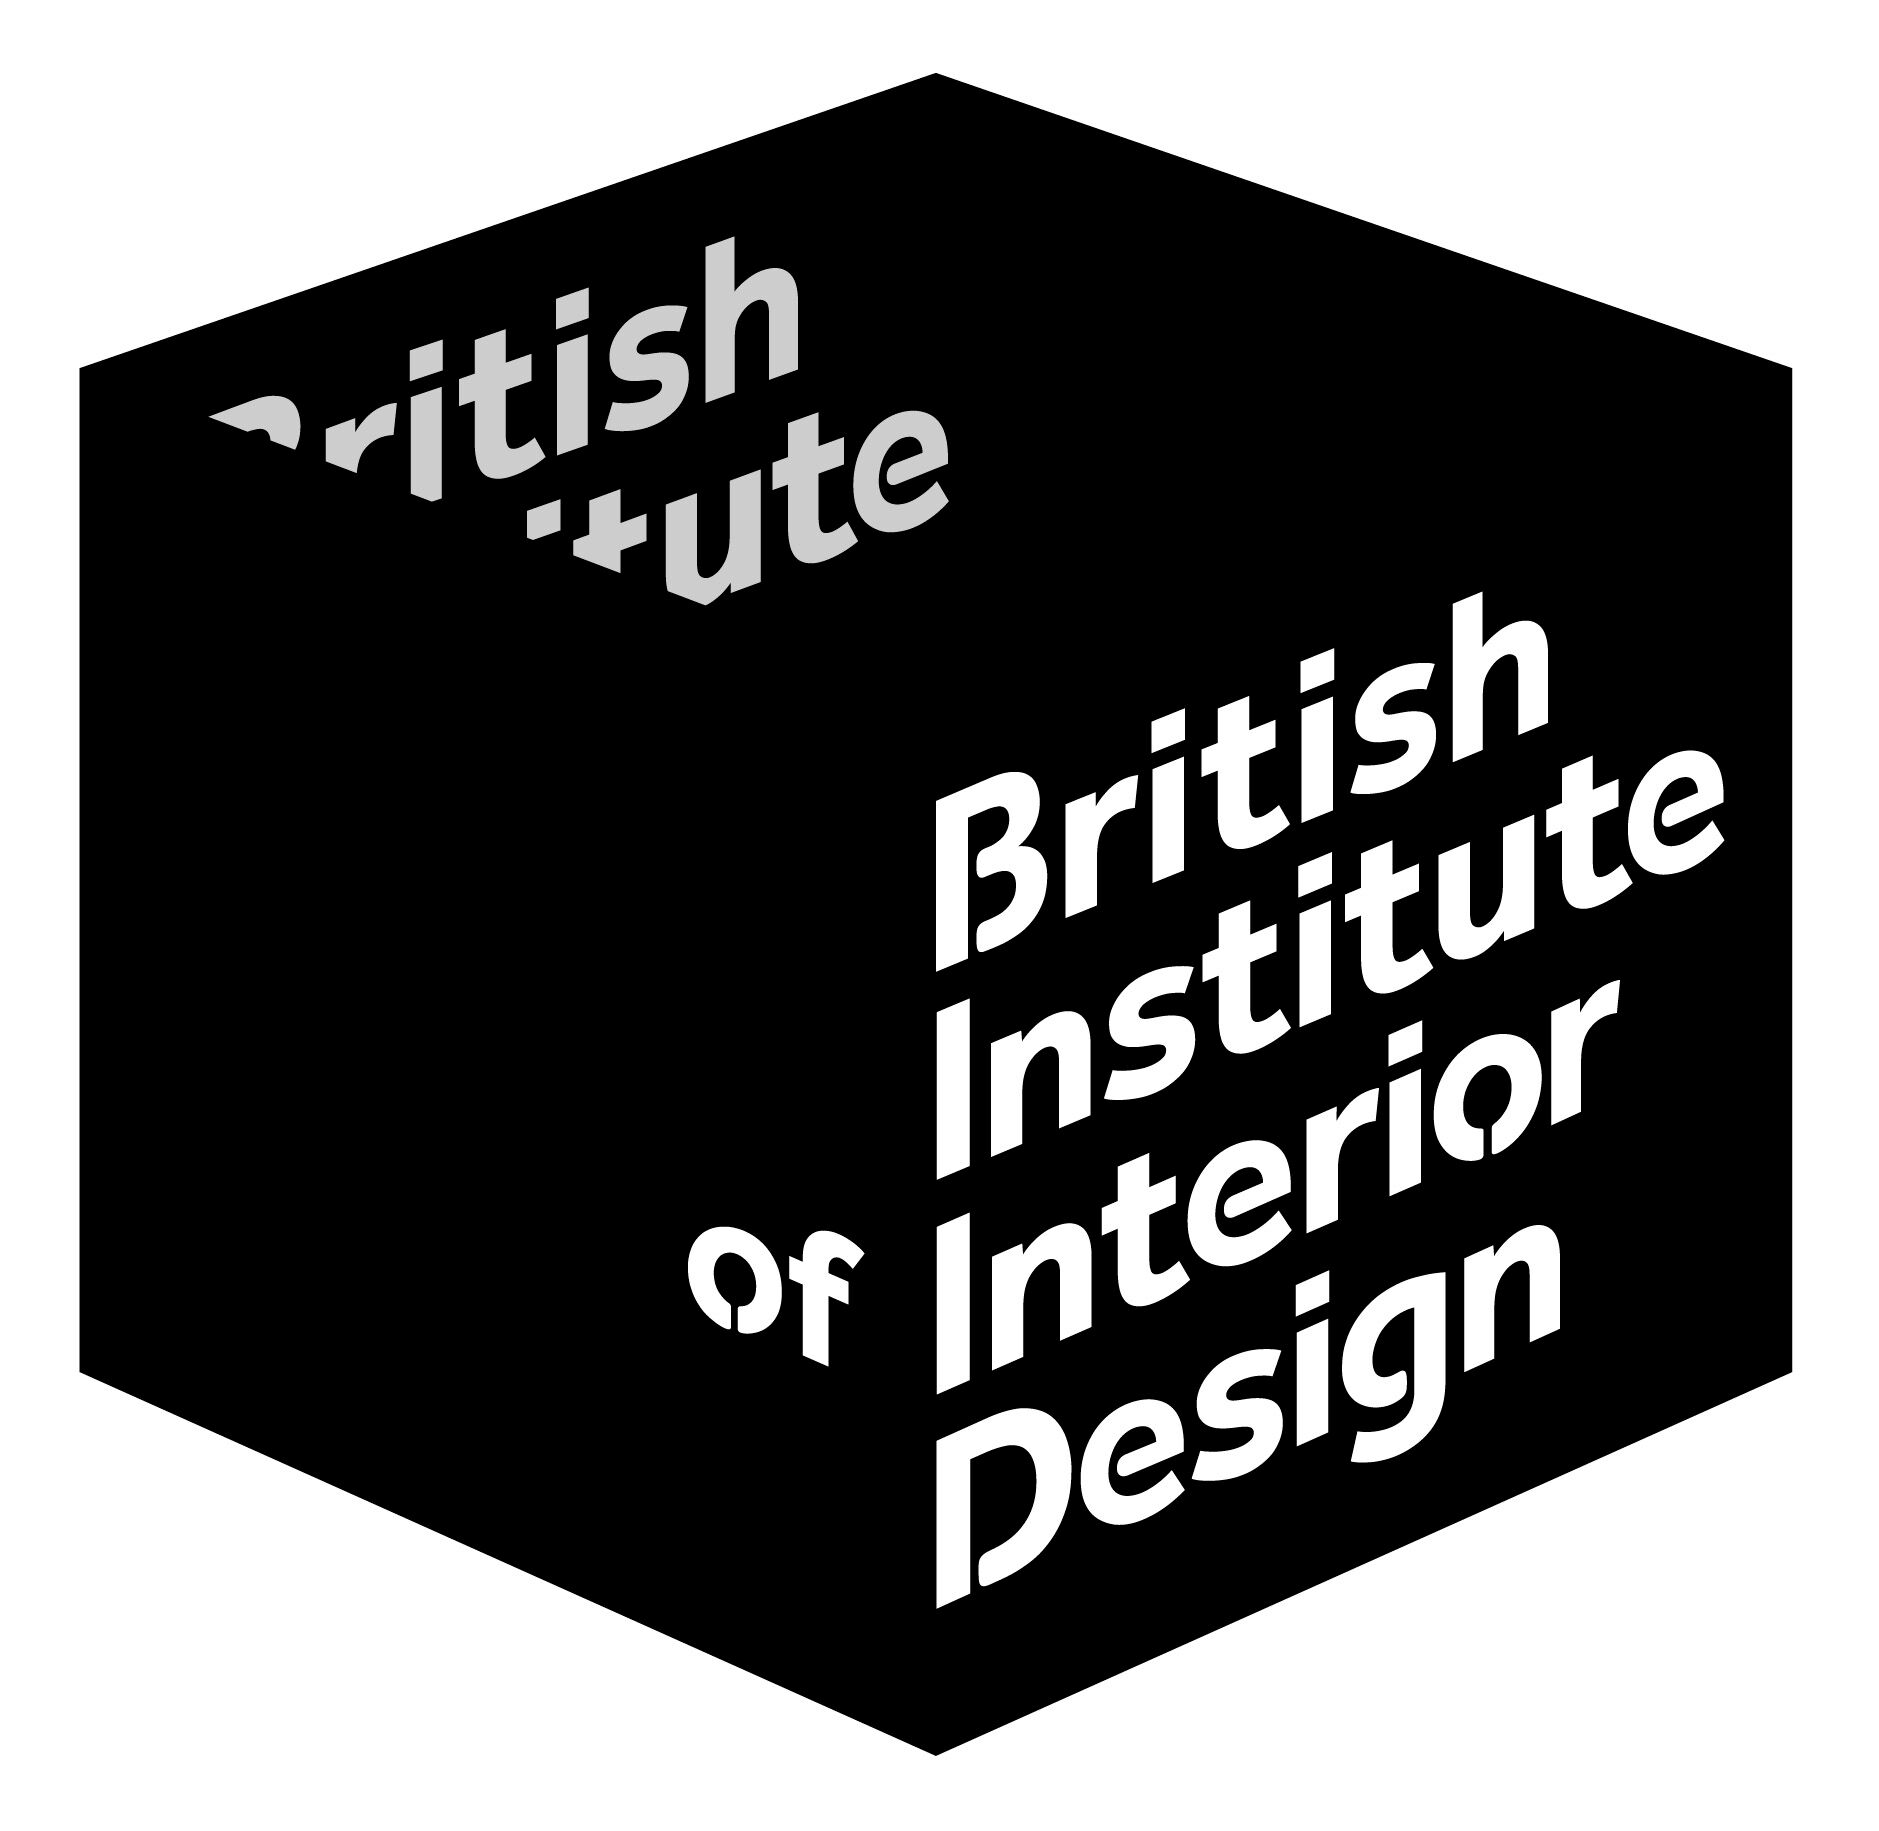 Speaking at The British Institute of Interior Design Business Success Conference